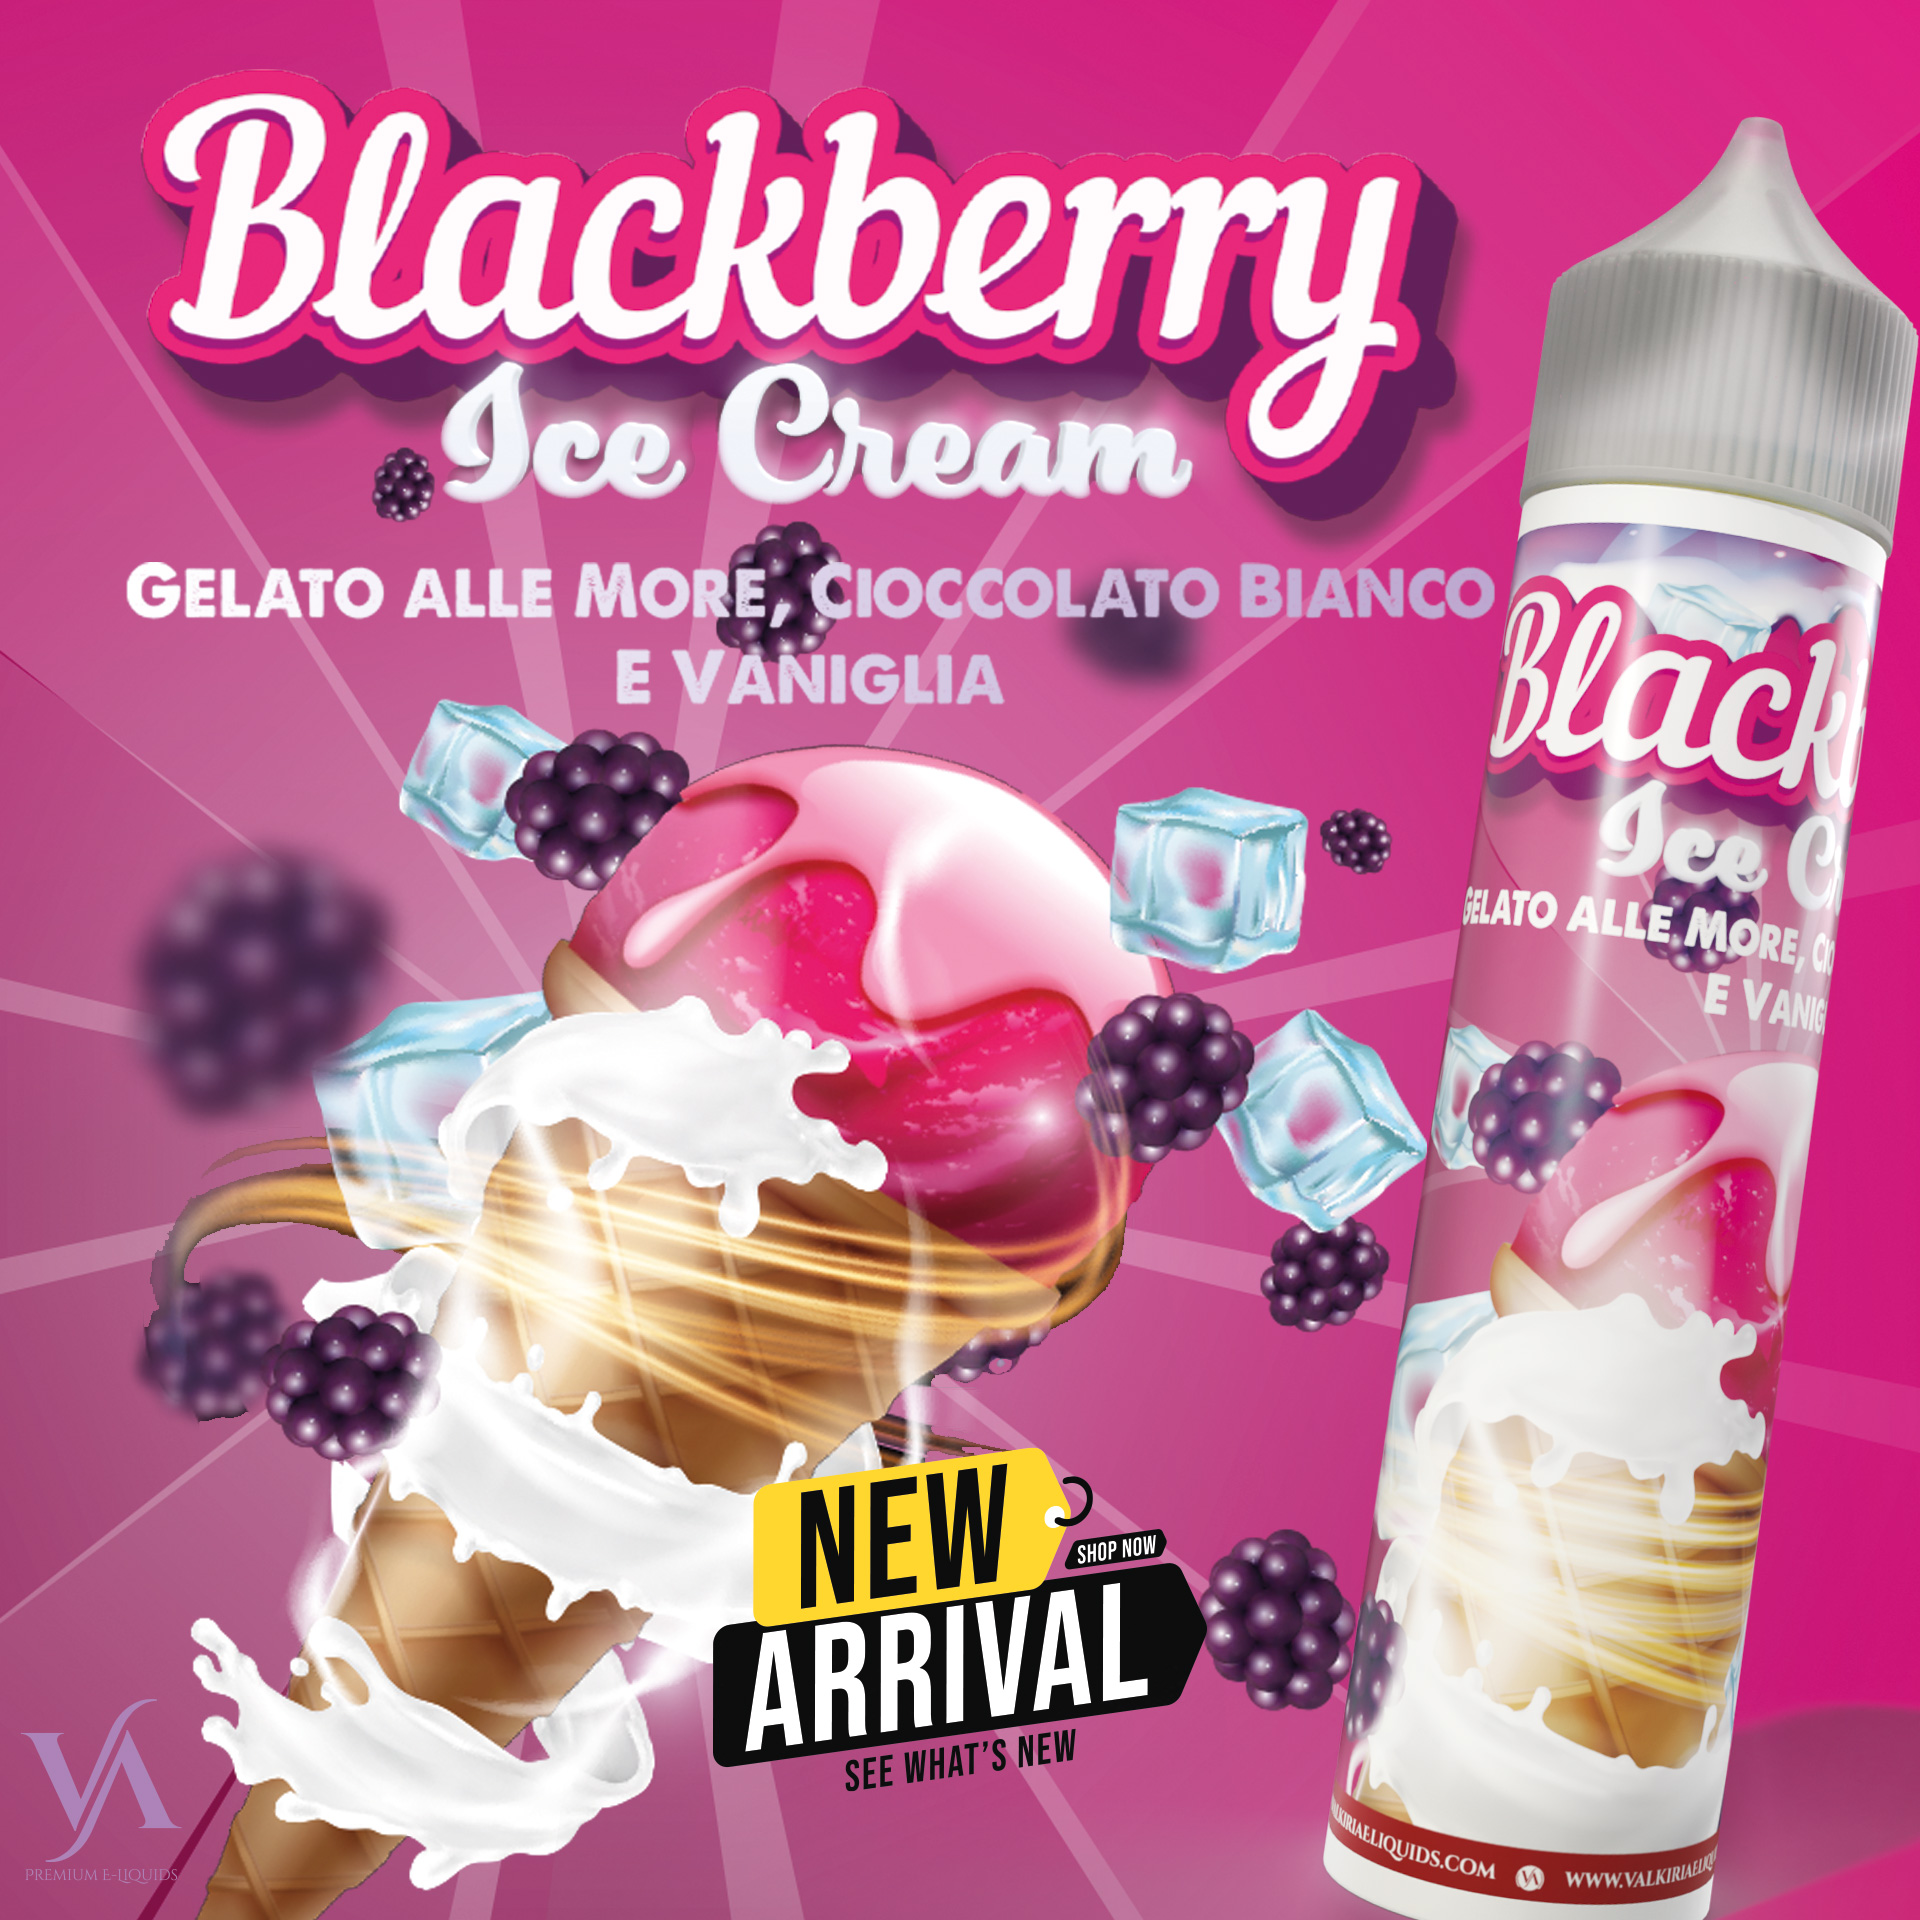 Blackberry Ice Cream Valkiria